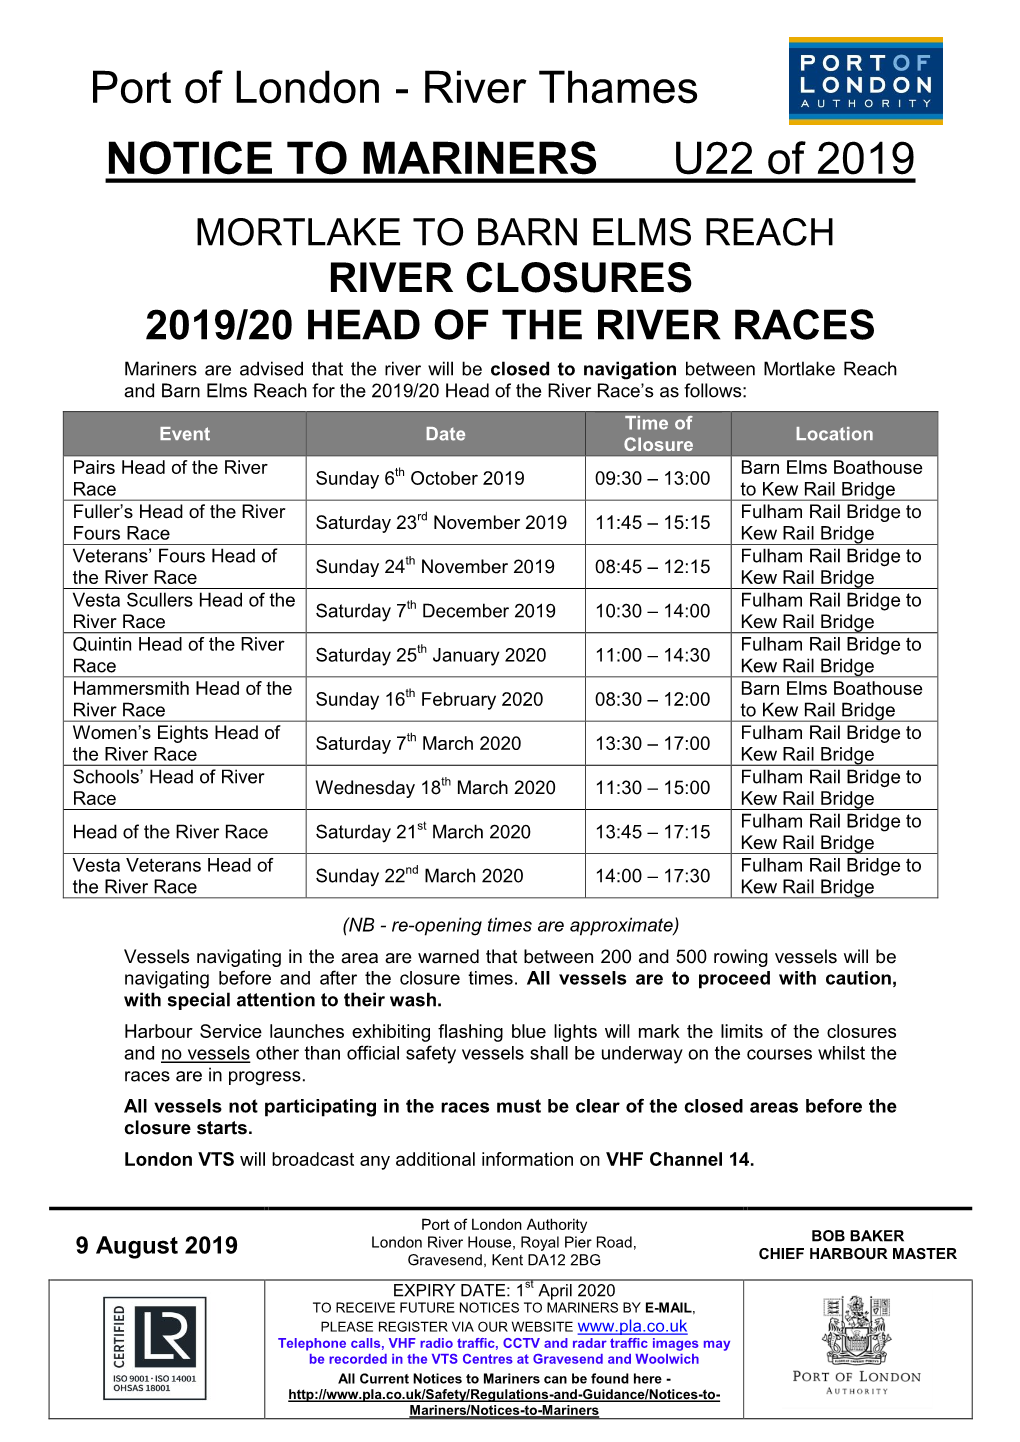 River Closures 2019/20 Head of the River Races